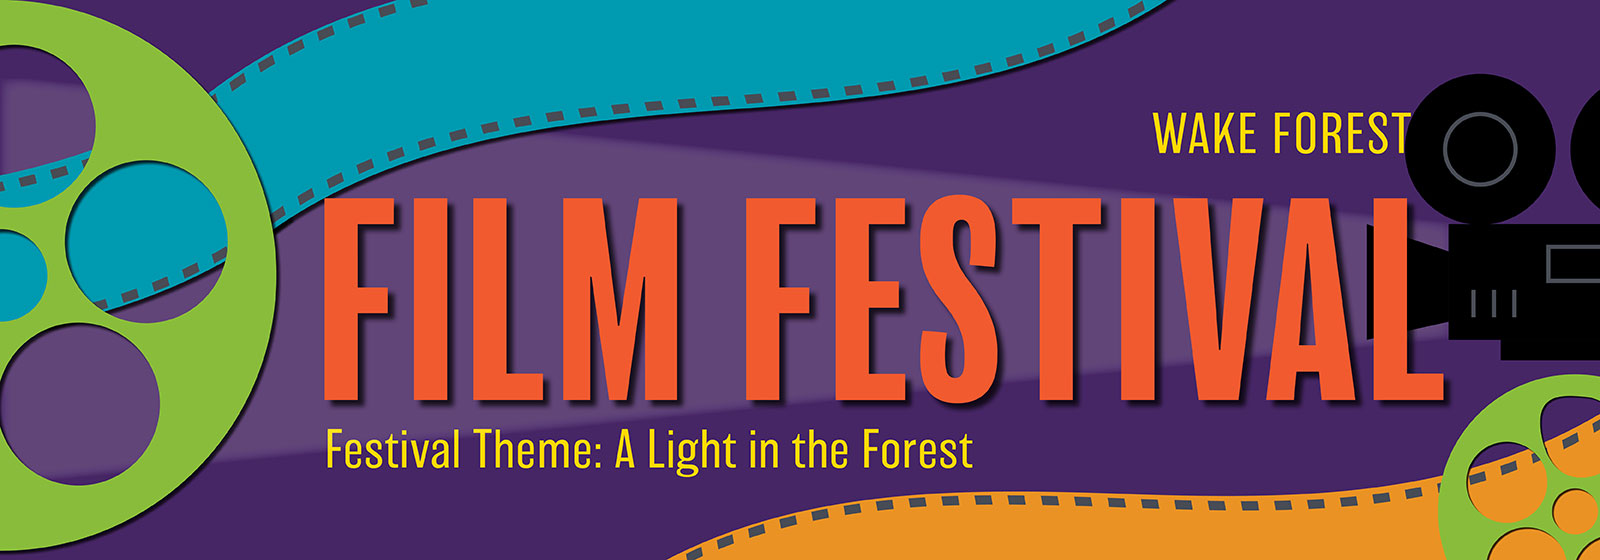 Wake Forest Film Festival